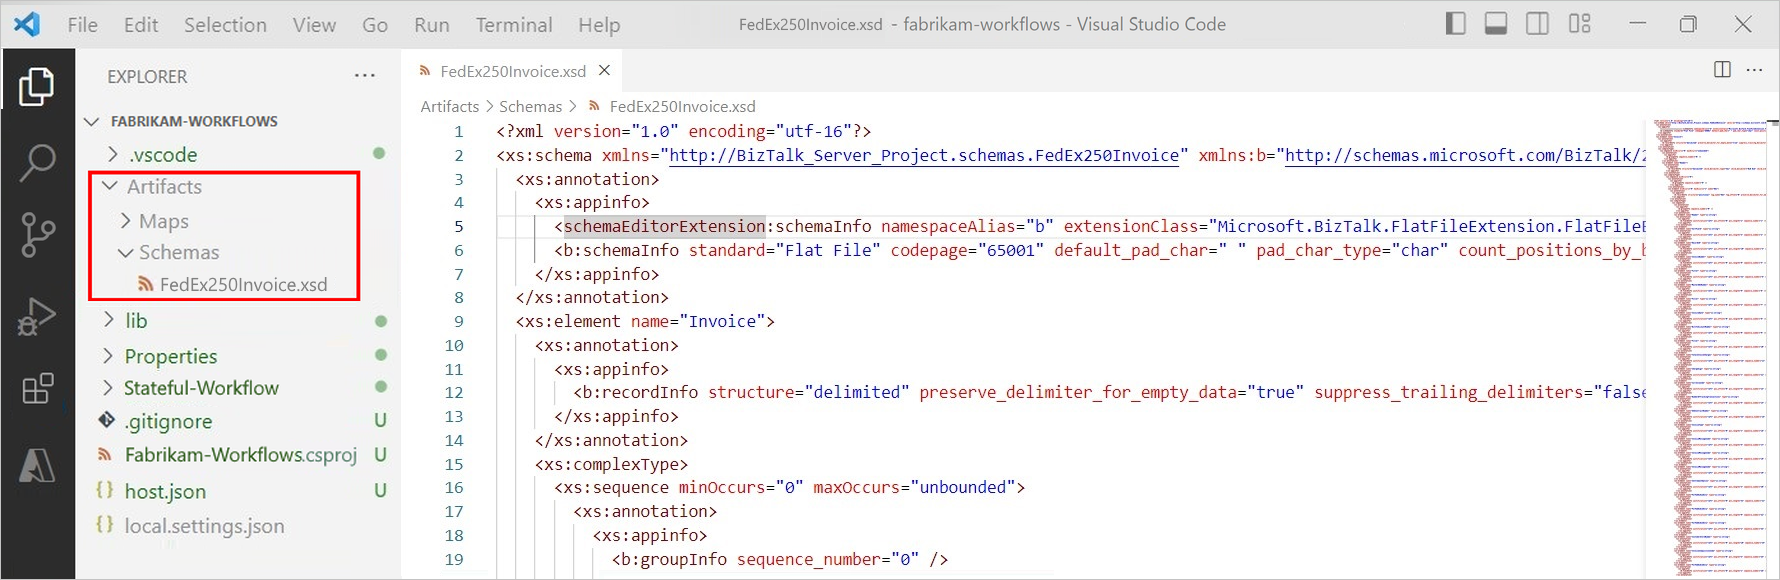 إنشاء مهام سير عمل قياسية باستخدام Visual Studio Code - Azure Logic Apps |  Microsoft Learn